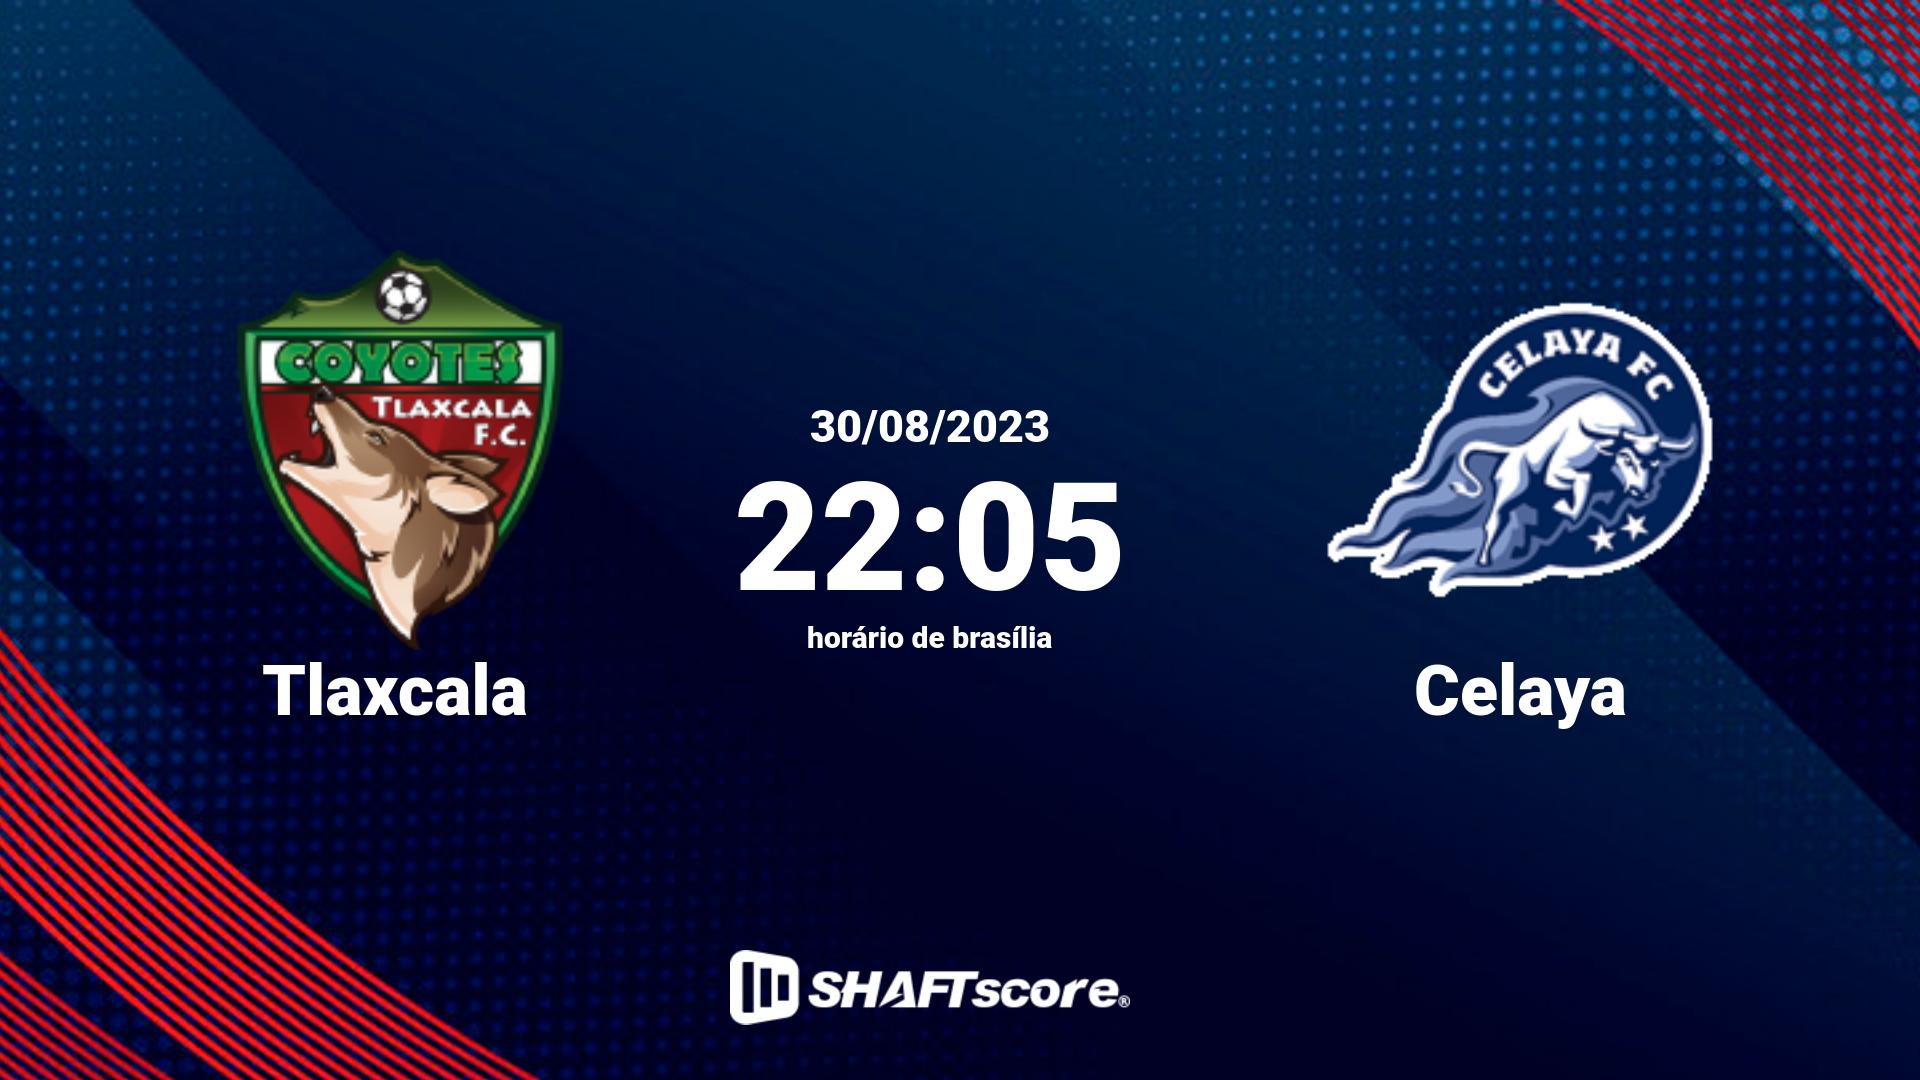 Estatísticas do jogo Tlaxcala vs Celaya 30.08 22:05